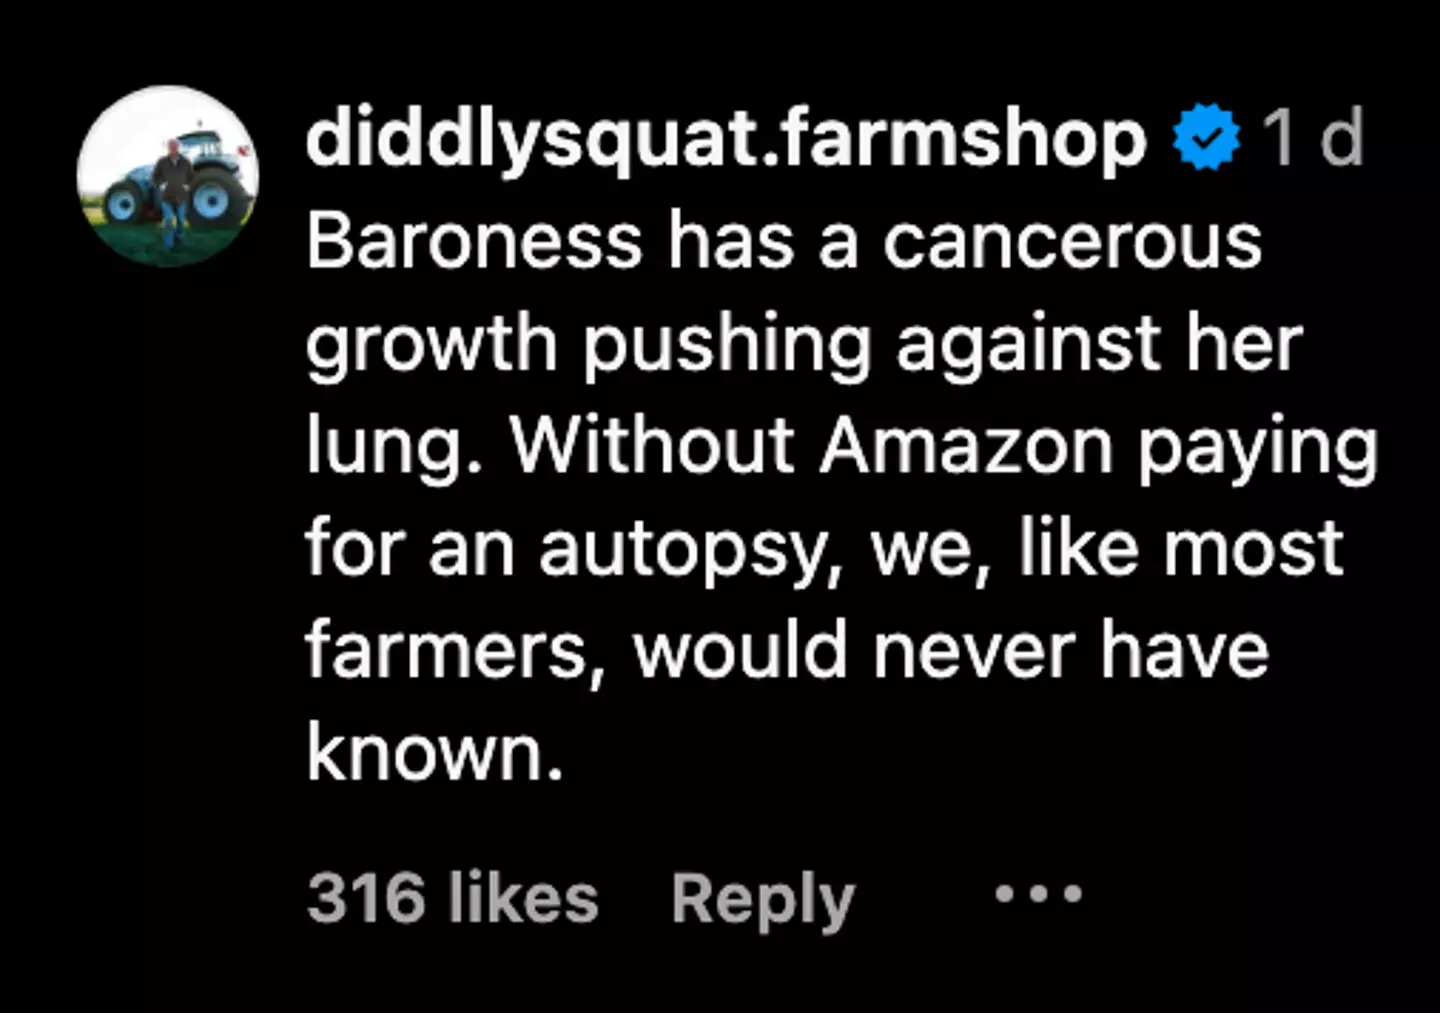 An honest account from the farm team. (Instagram/@diddlysquat.farmshop)